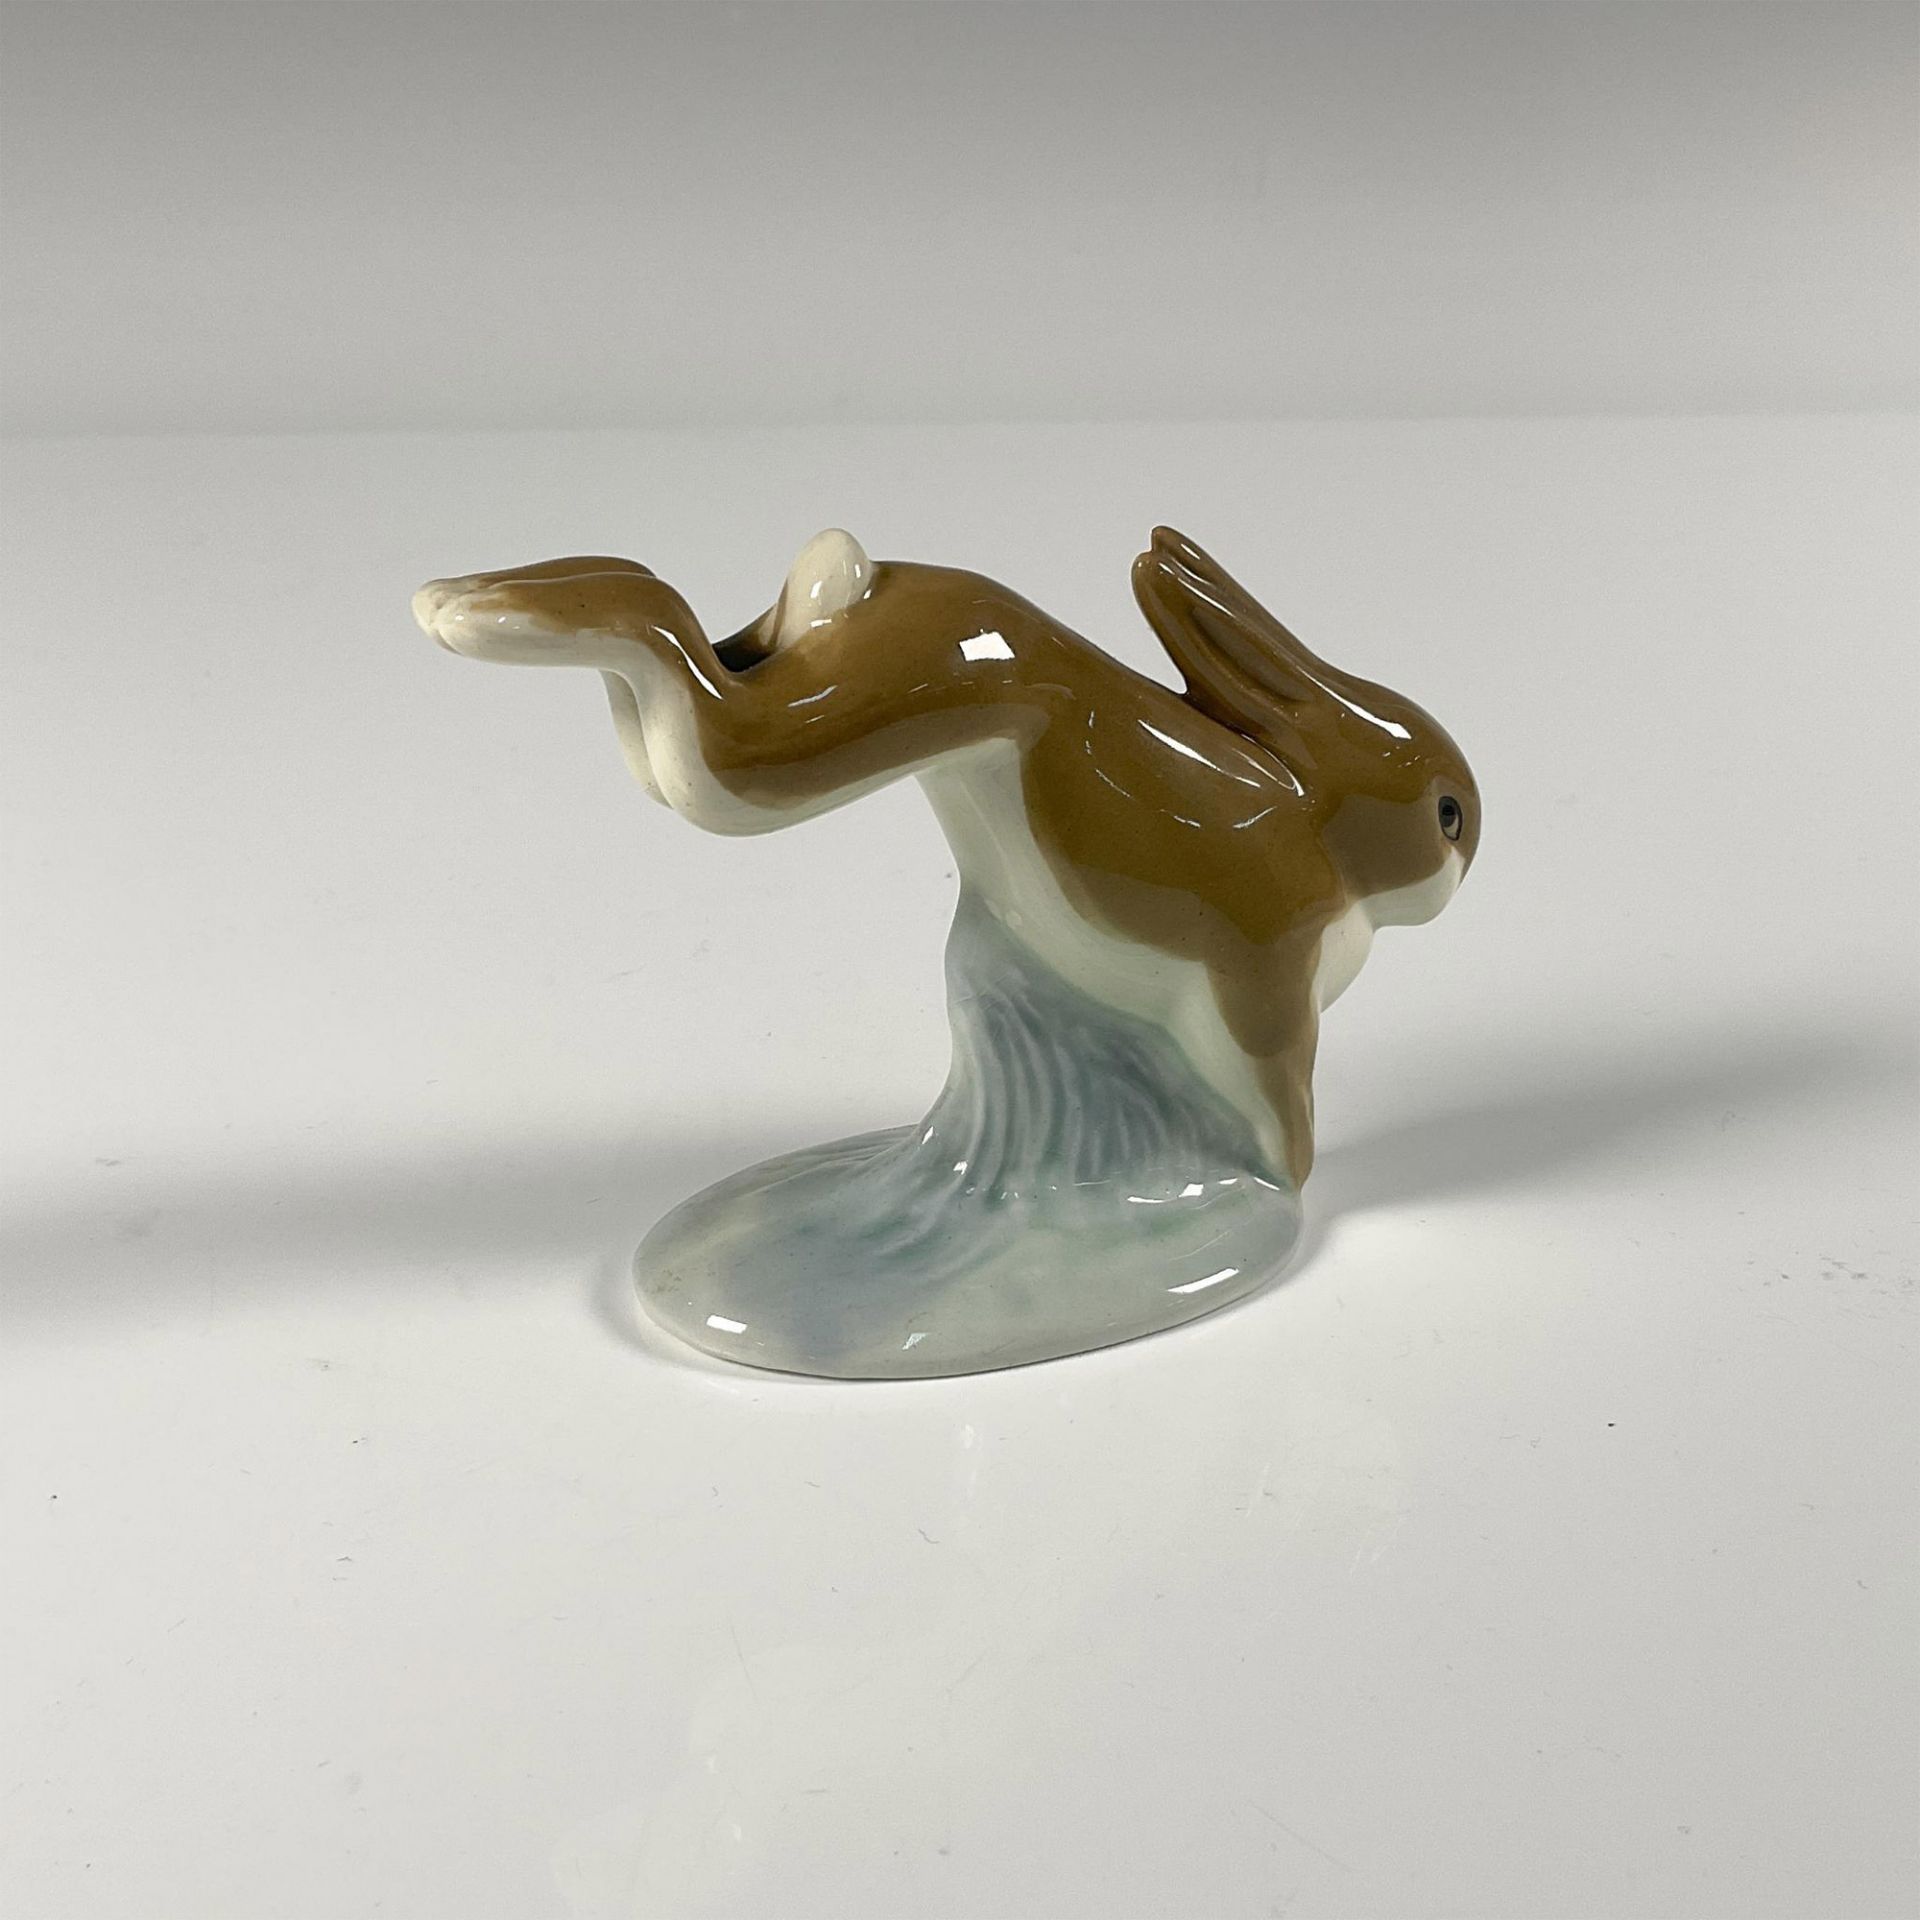 Midminter Porcelain Figurine, Leaping Rabbit - Image 2 of 3